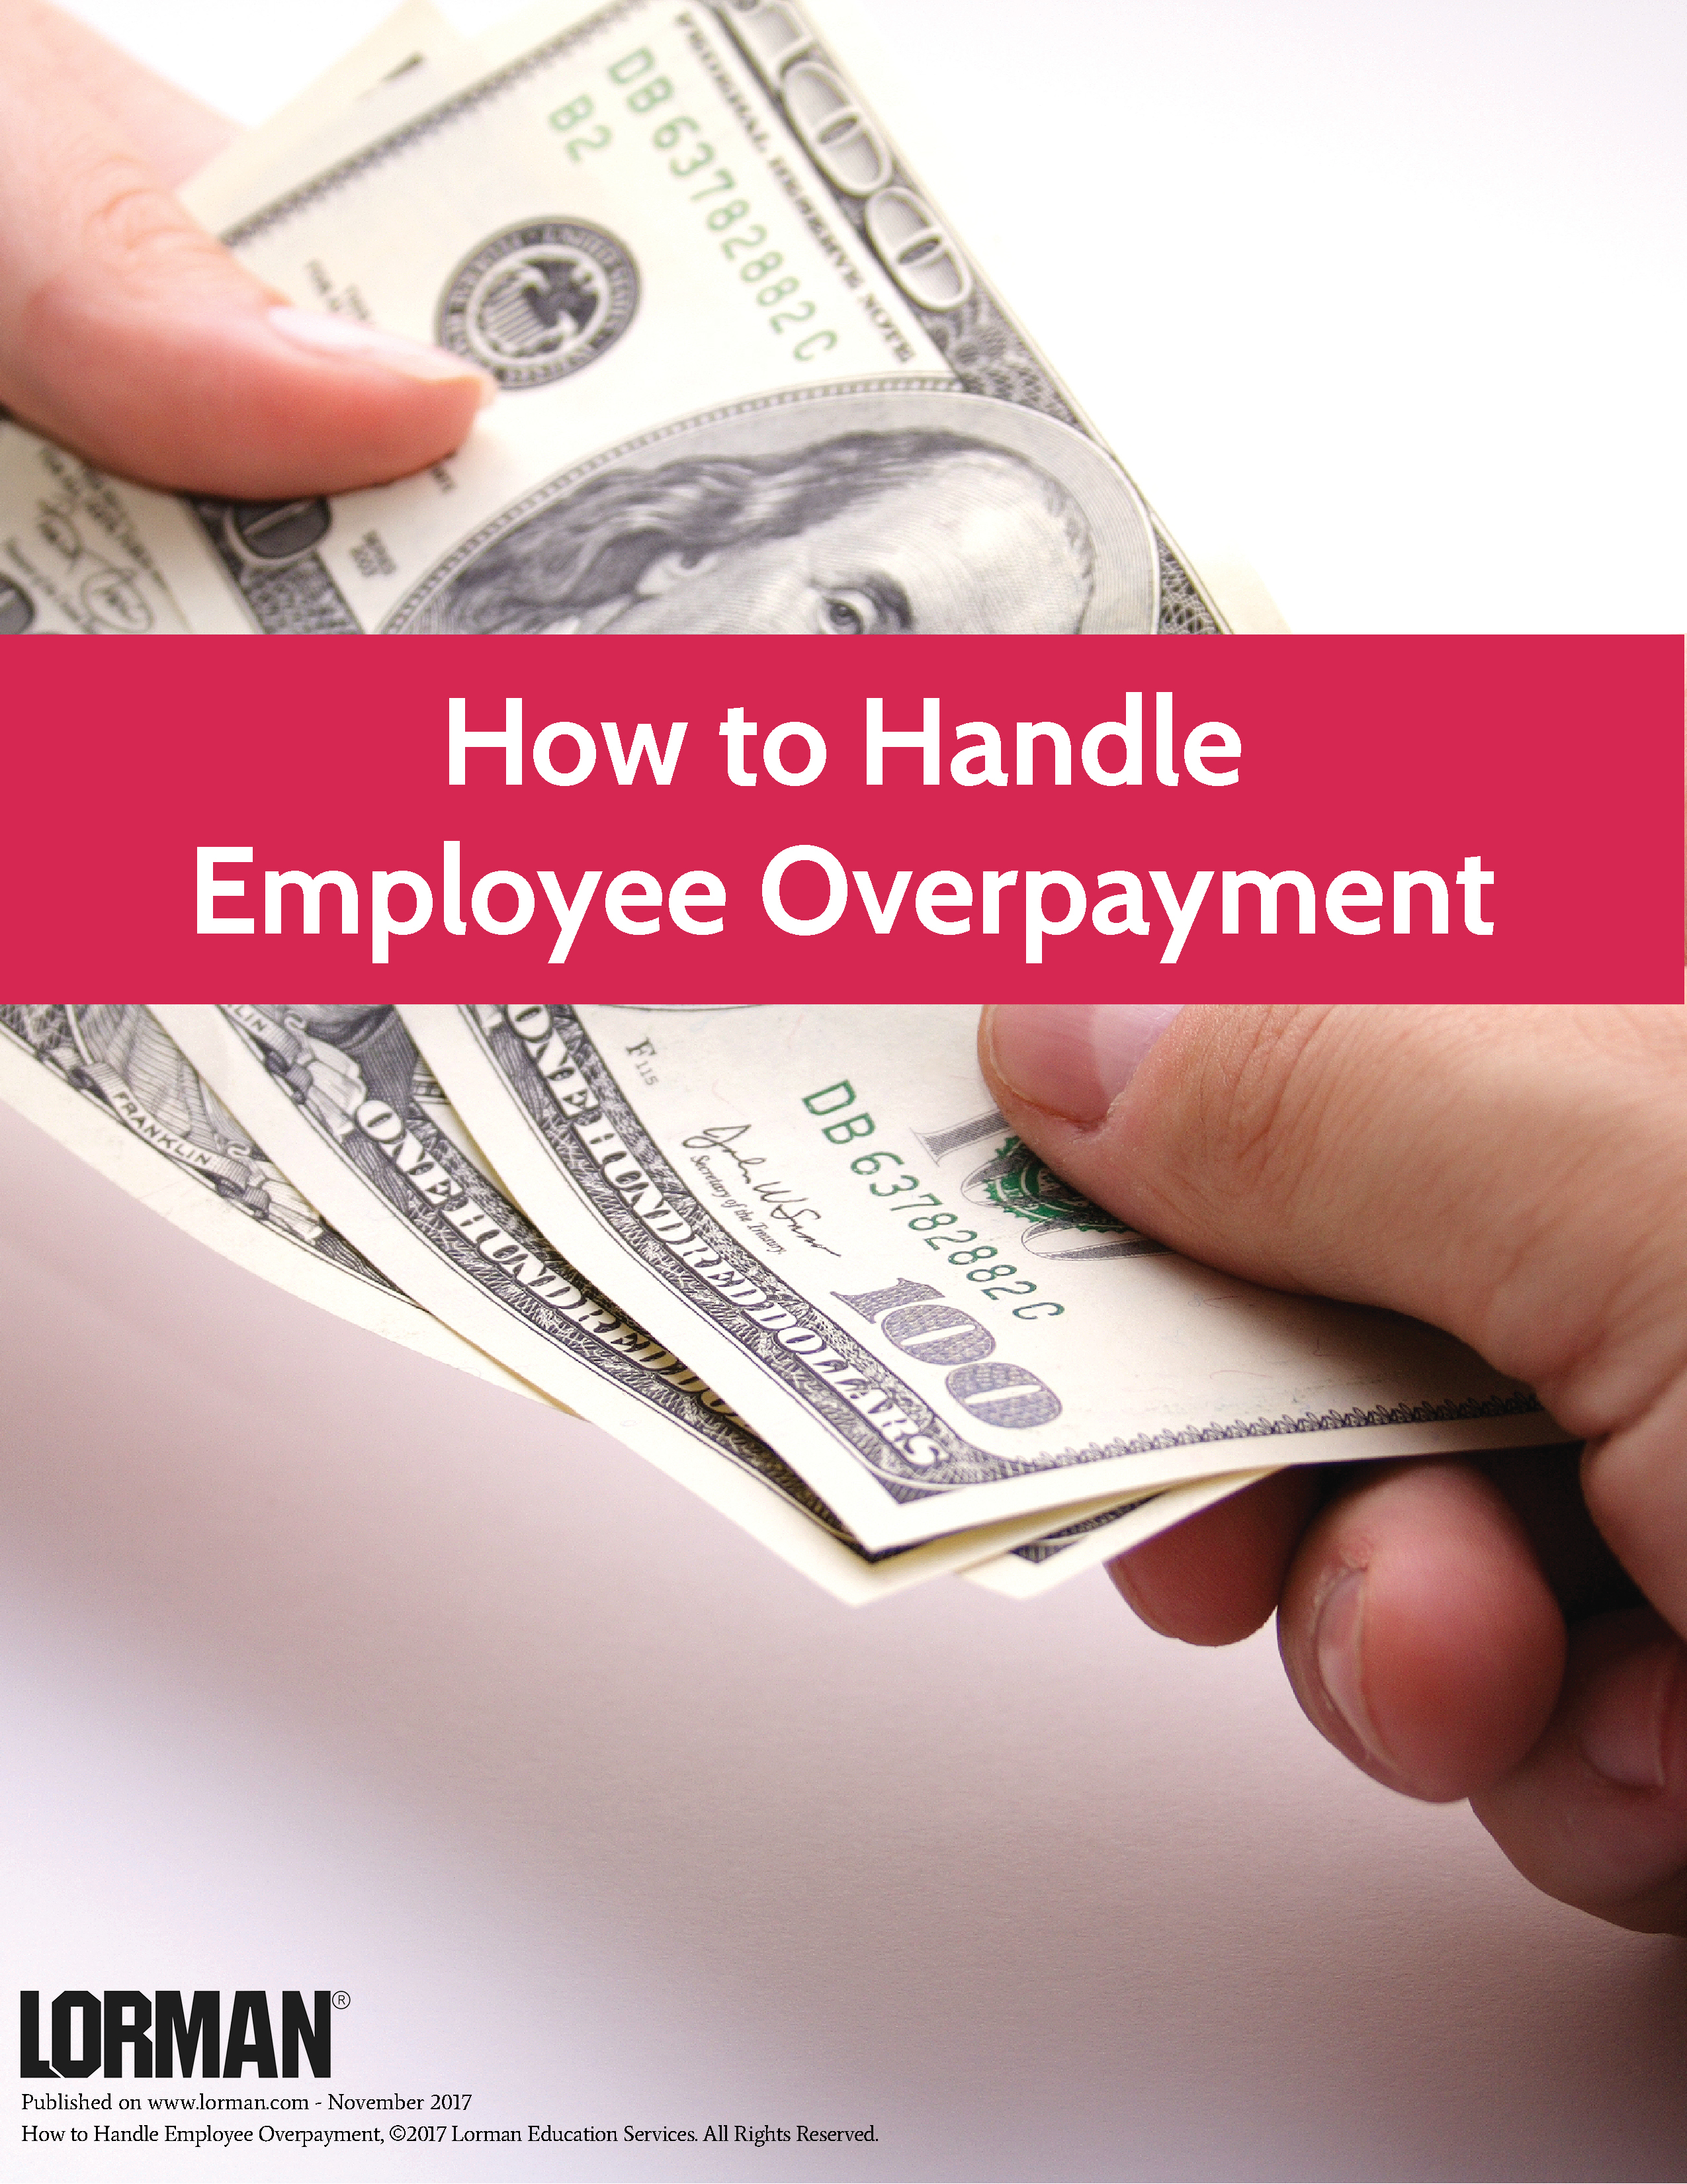 How to Handle Employee Overpayment